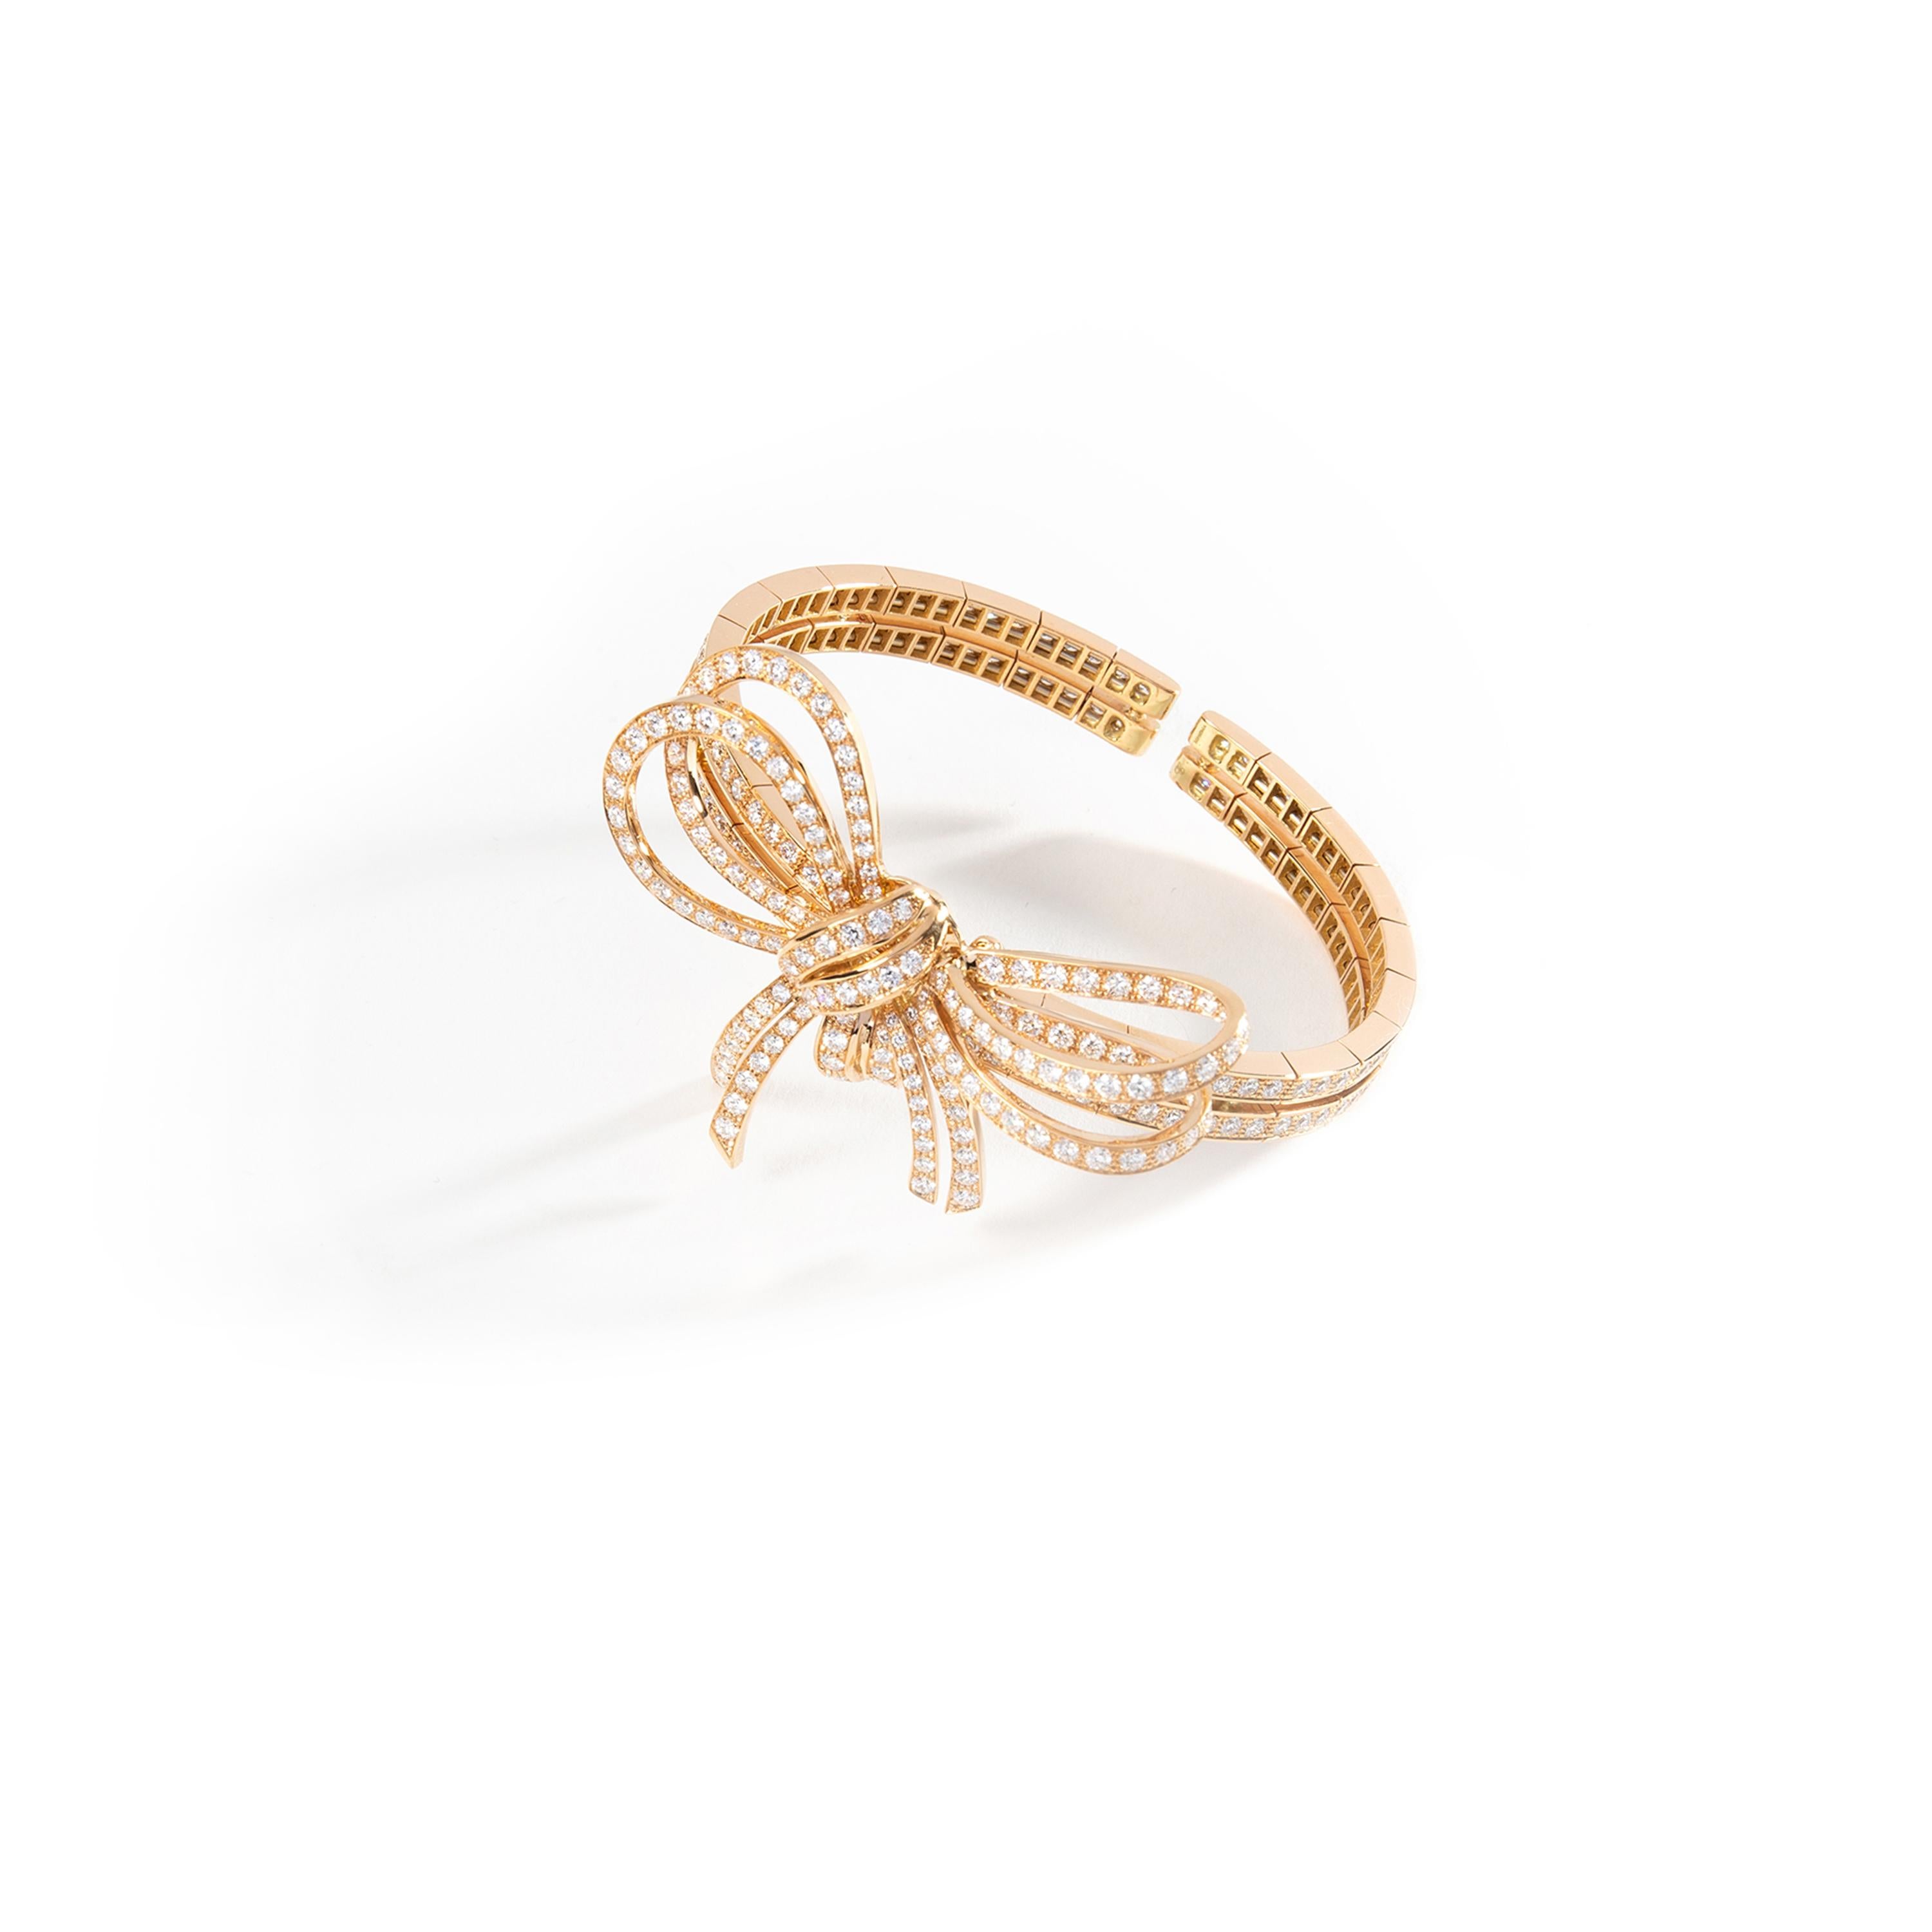 Important flexible Bracelet red gold 309 diamonds 8.22 carats.
